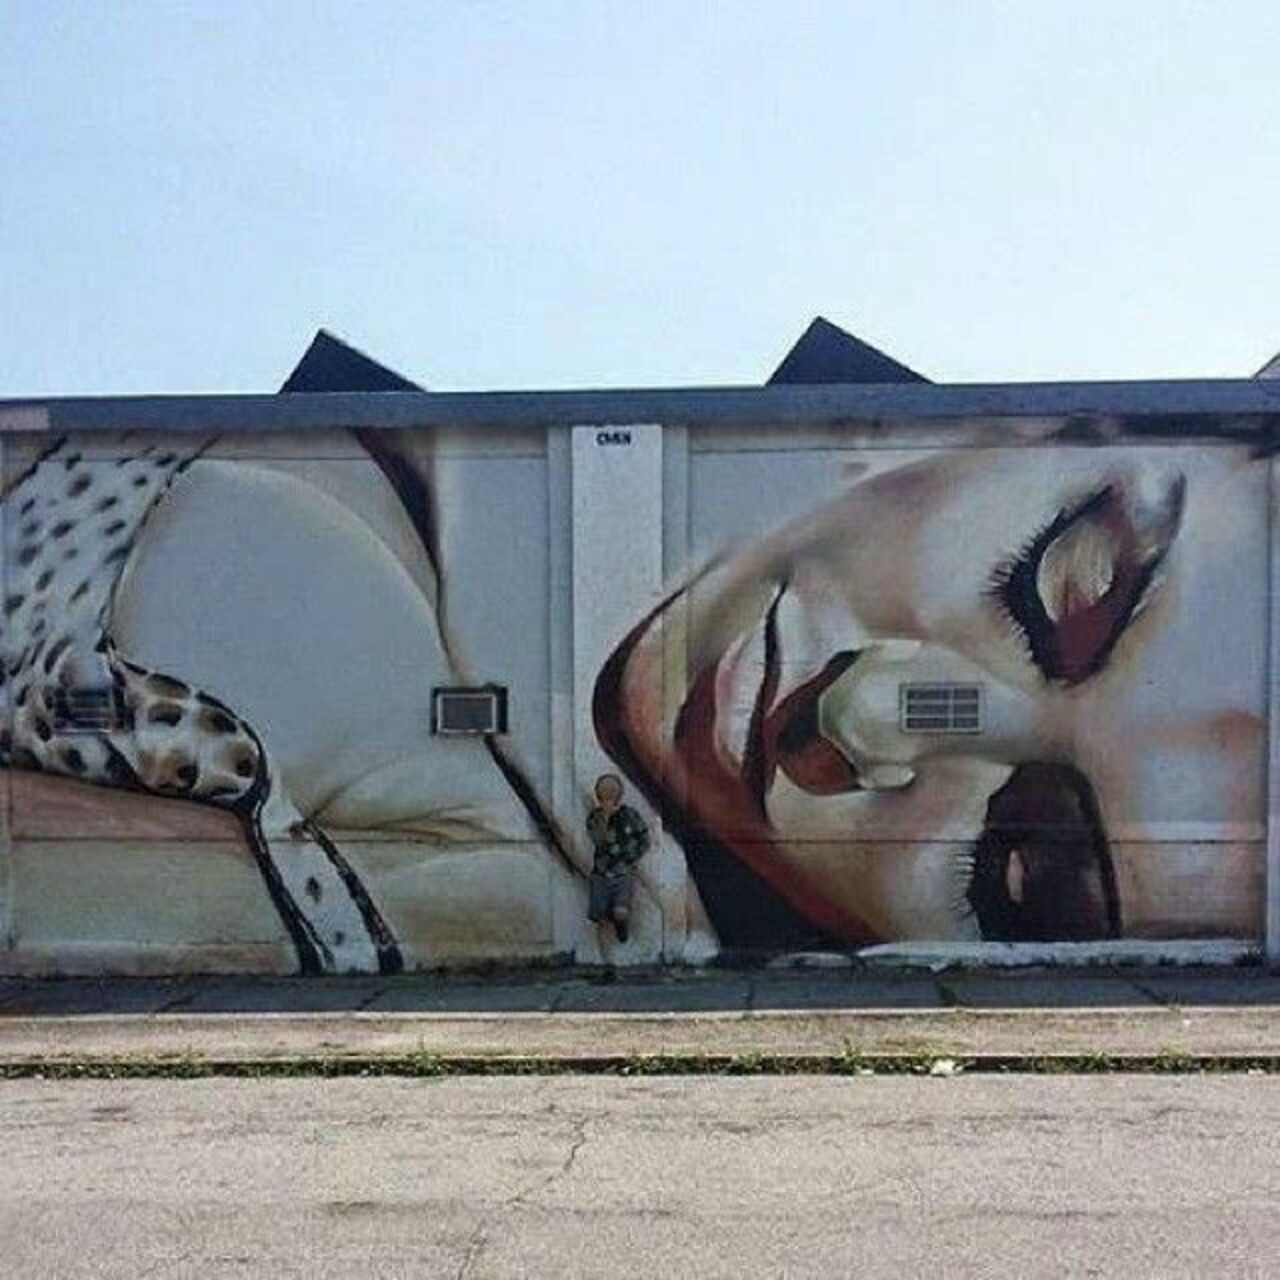 Omen514

#Graffiti #StreetArt #Mural #painting #Urban #Art http://t.co/rmbnP1ycRt